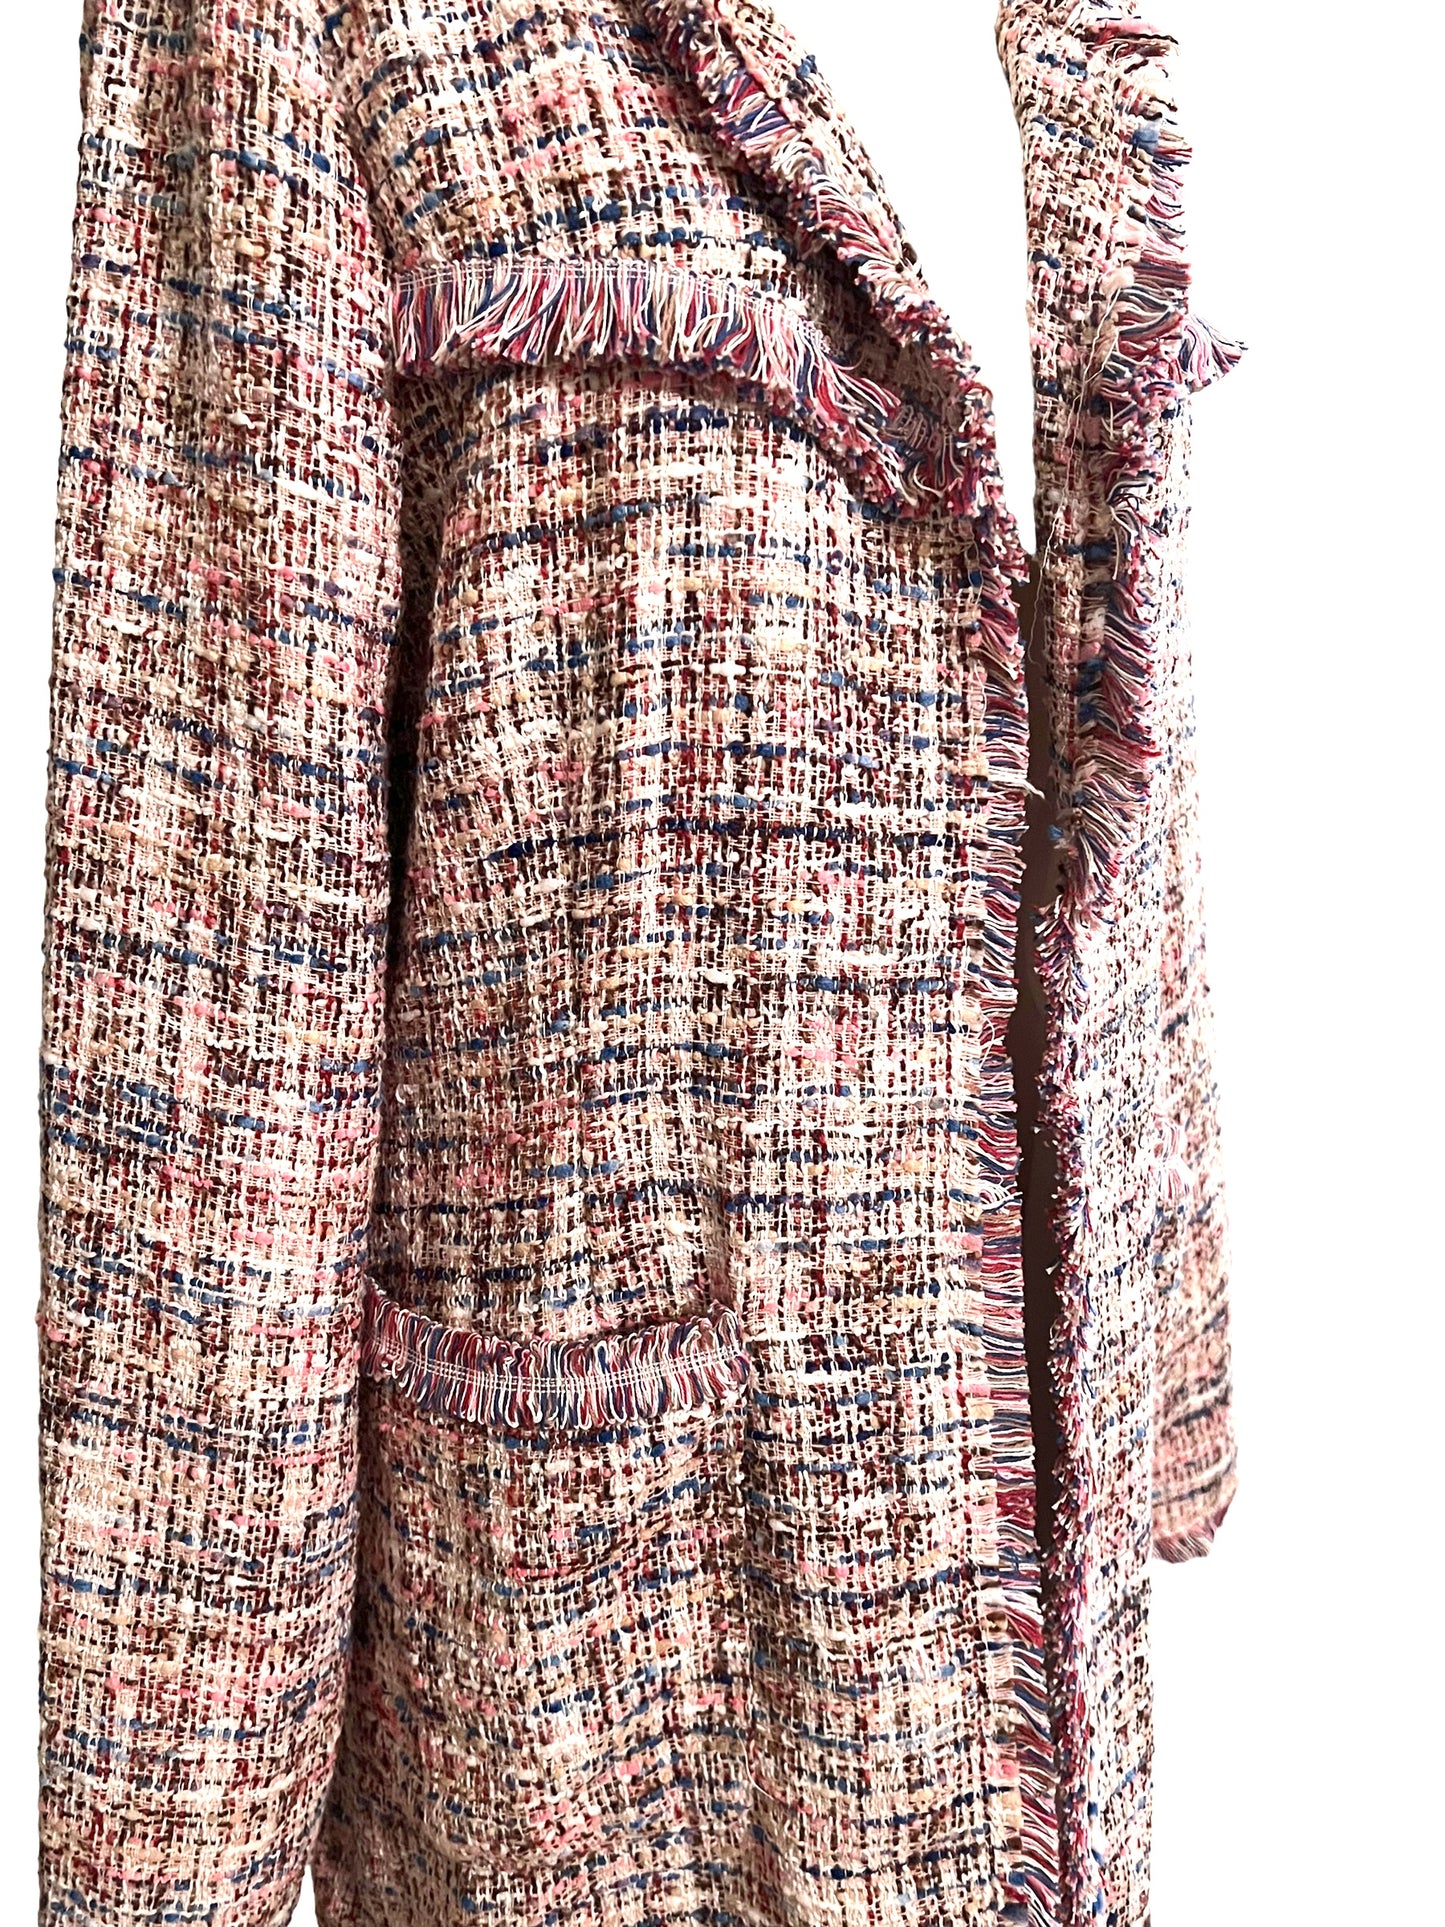 Laundry by Shelli Segal Pink Tweed Size M Jacket Blazer